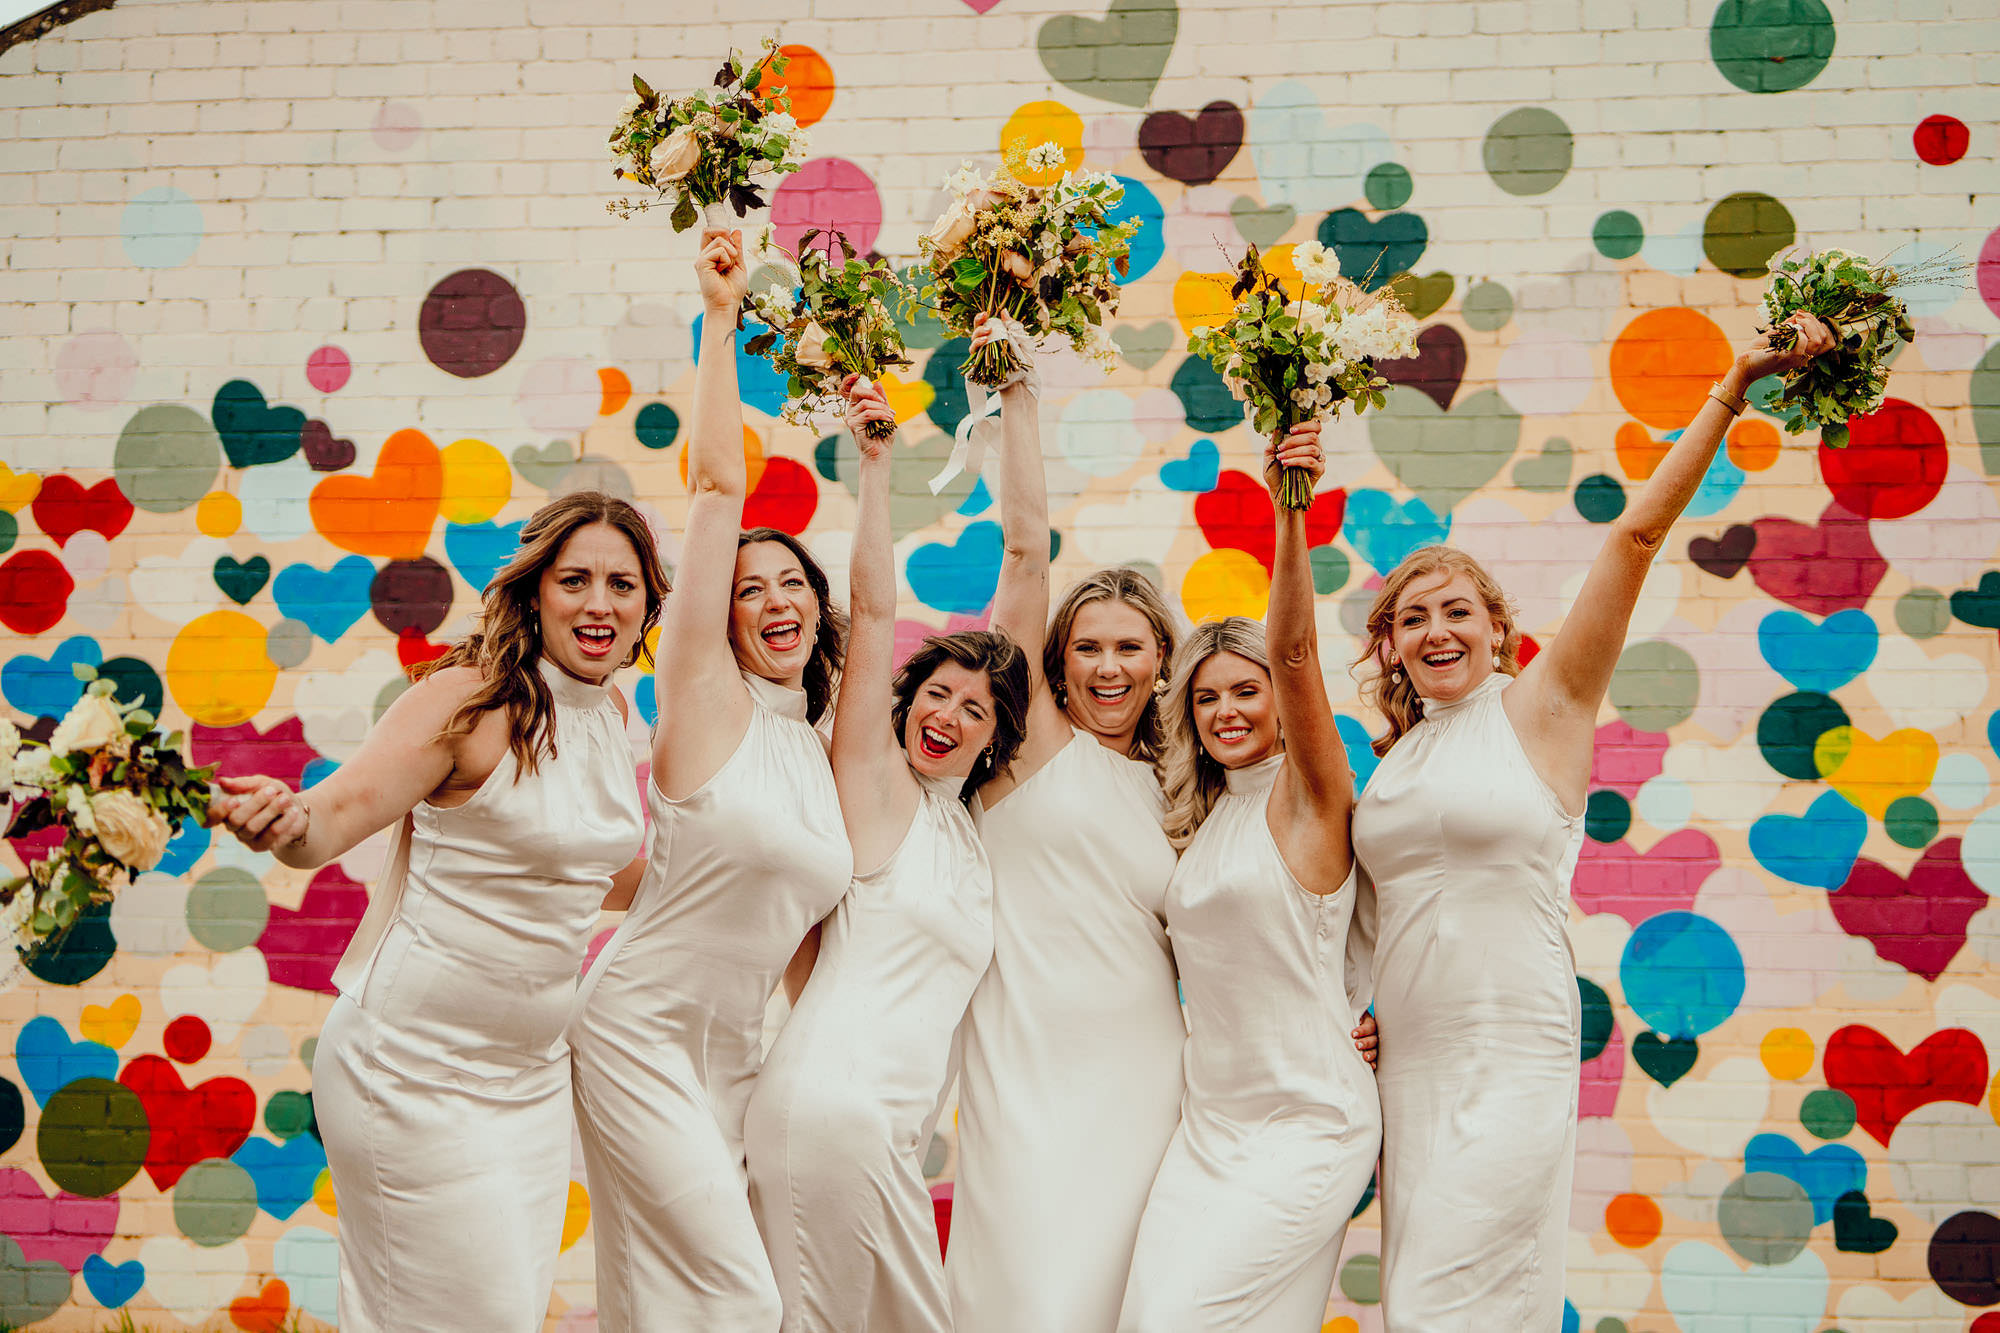 Colourful wedding photography york venues hamish irvine 